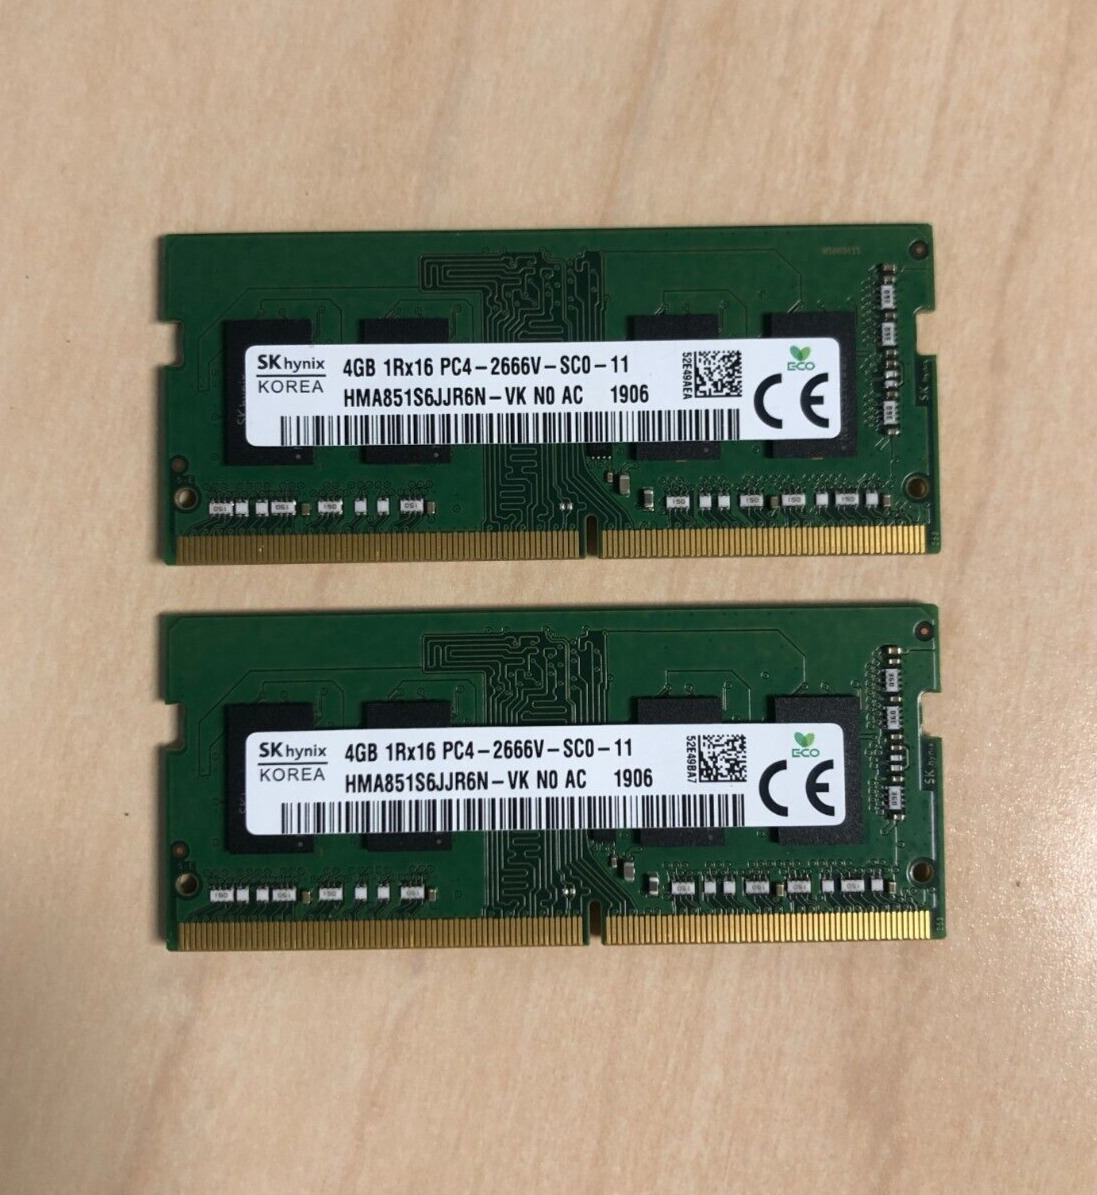 Lot of 10 SK hynix 8GB (2x4GB) DDR4 SODIMM 1Rx16 PC4-2666V COMPUTER MEMORY RAM